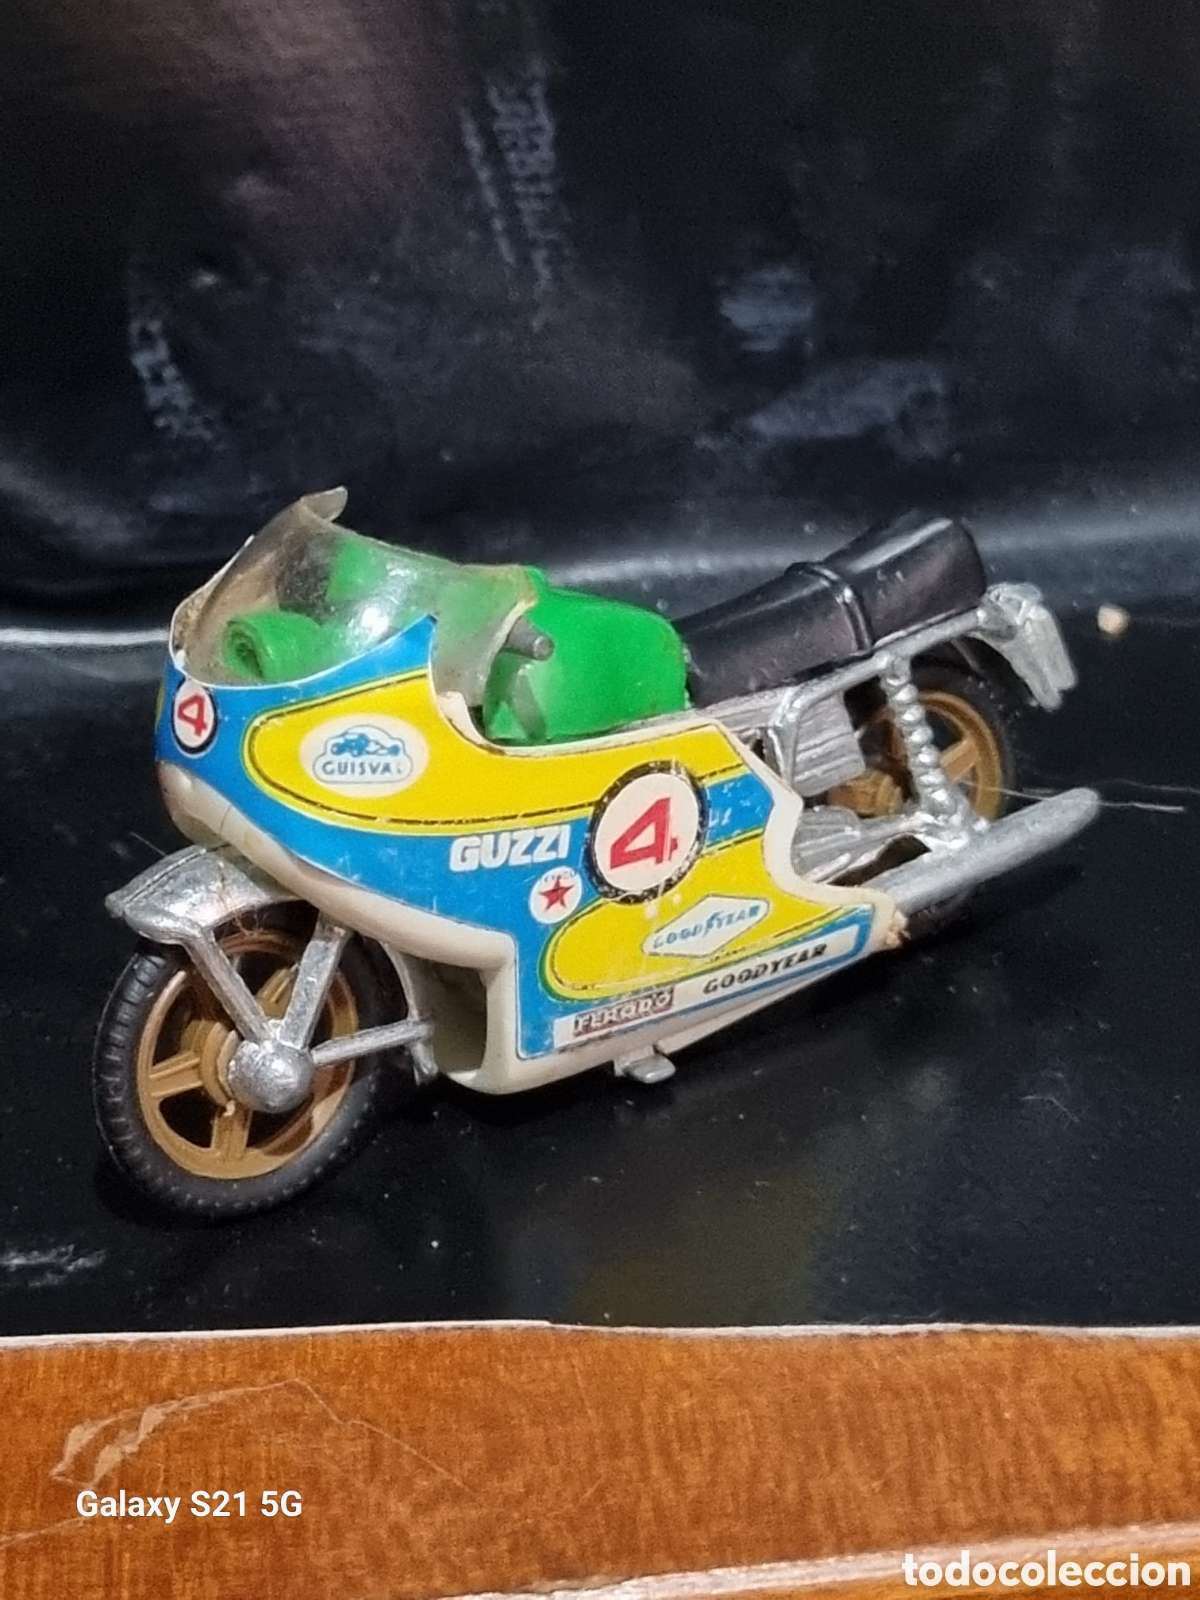 Collection miniatures Moto guzzi à vendre